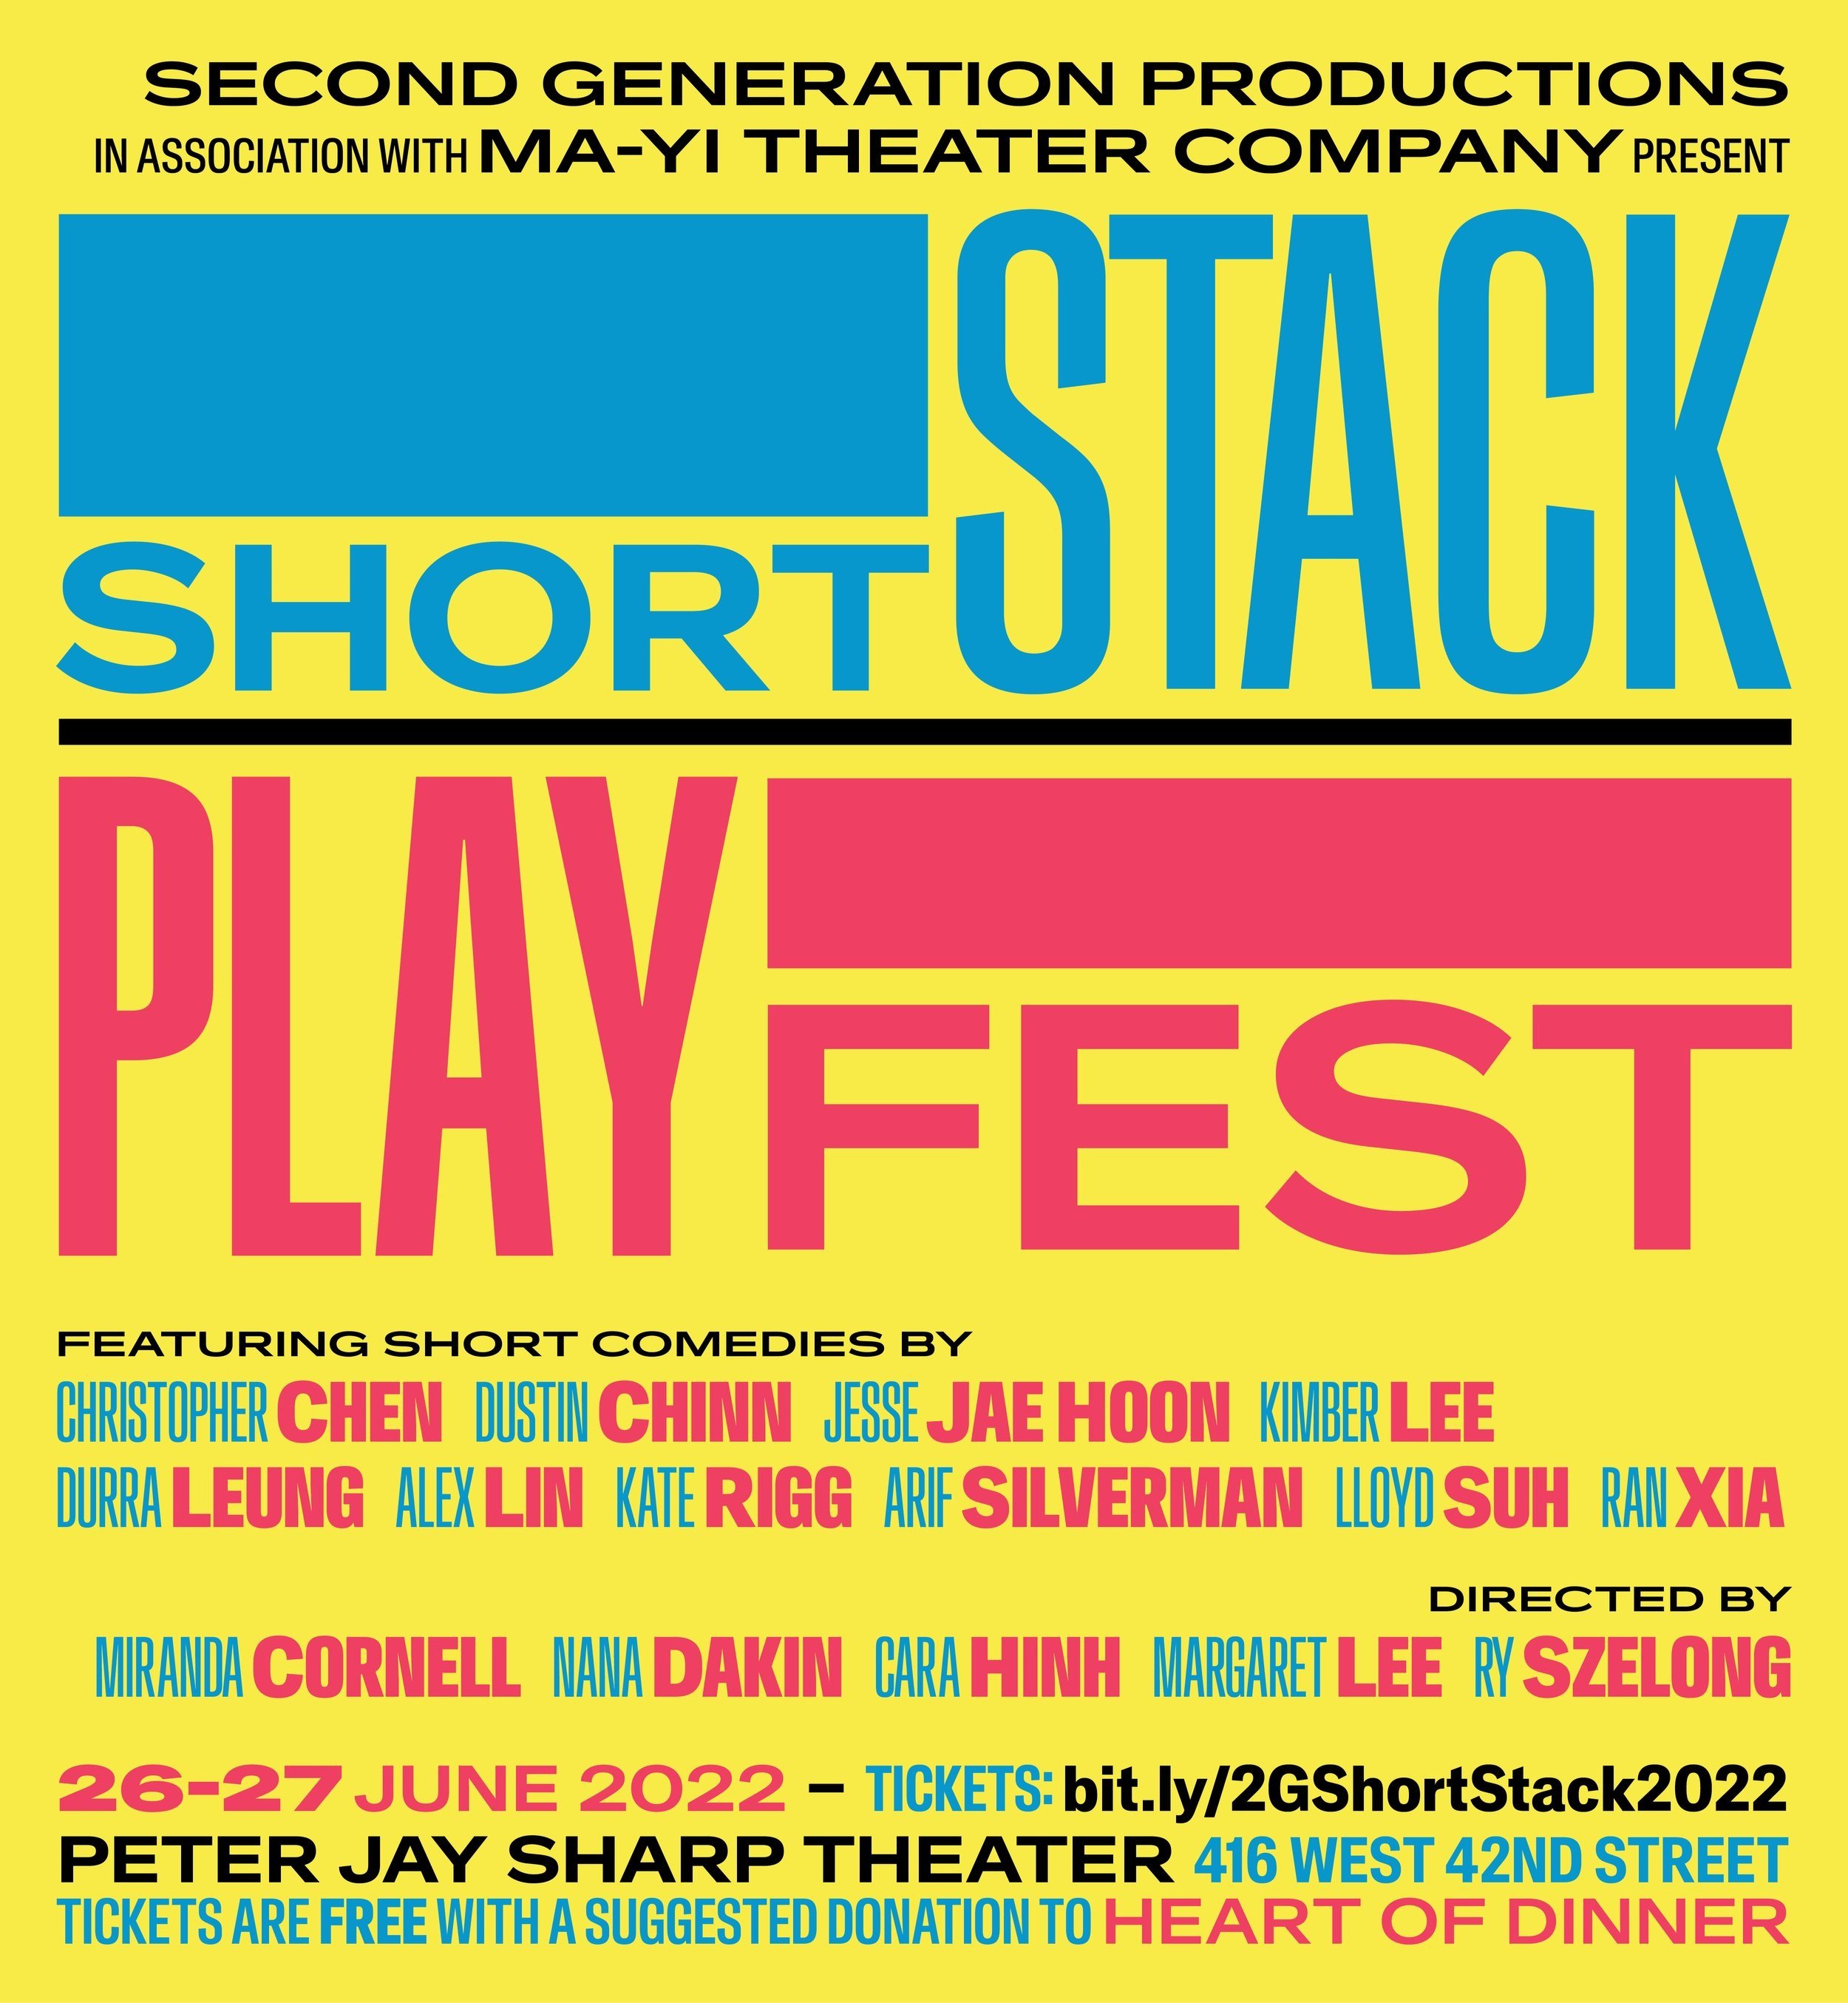 Short Stack Play Fest – 2022